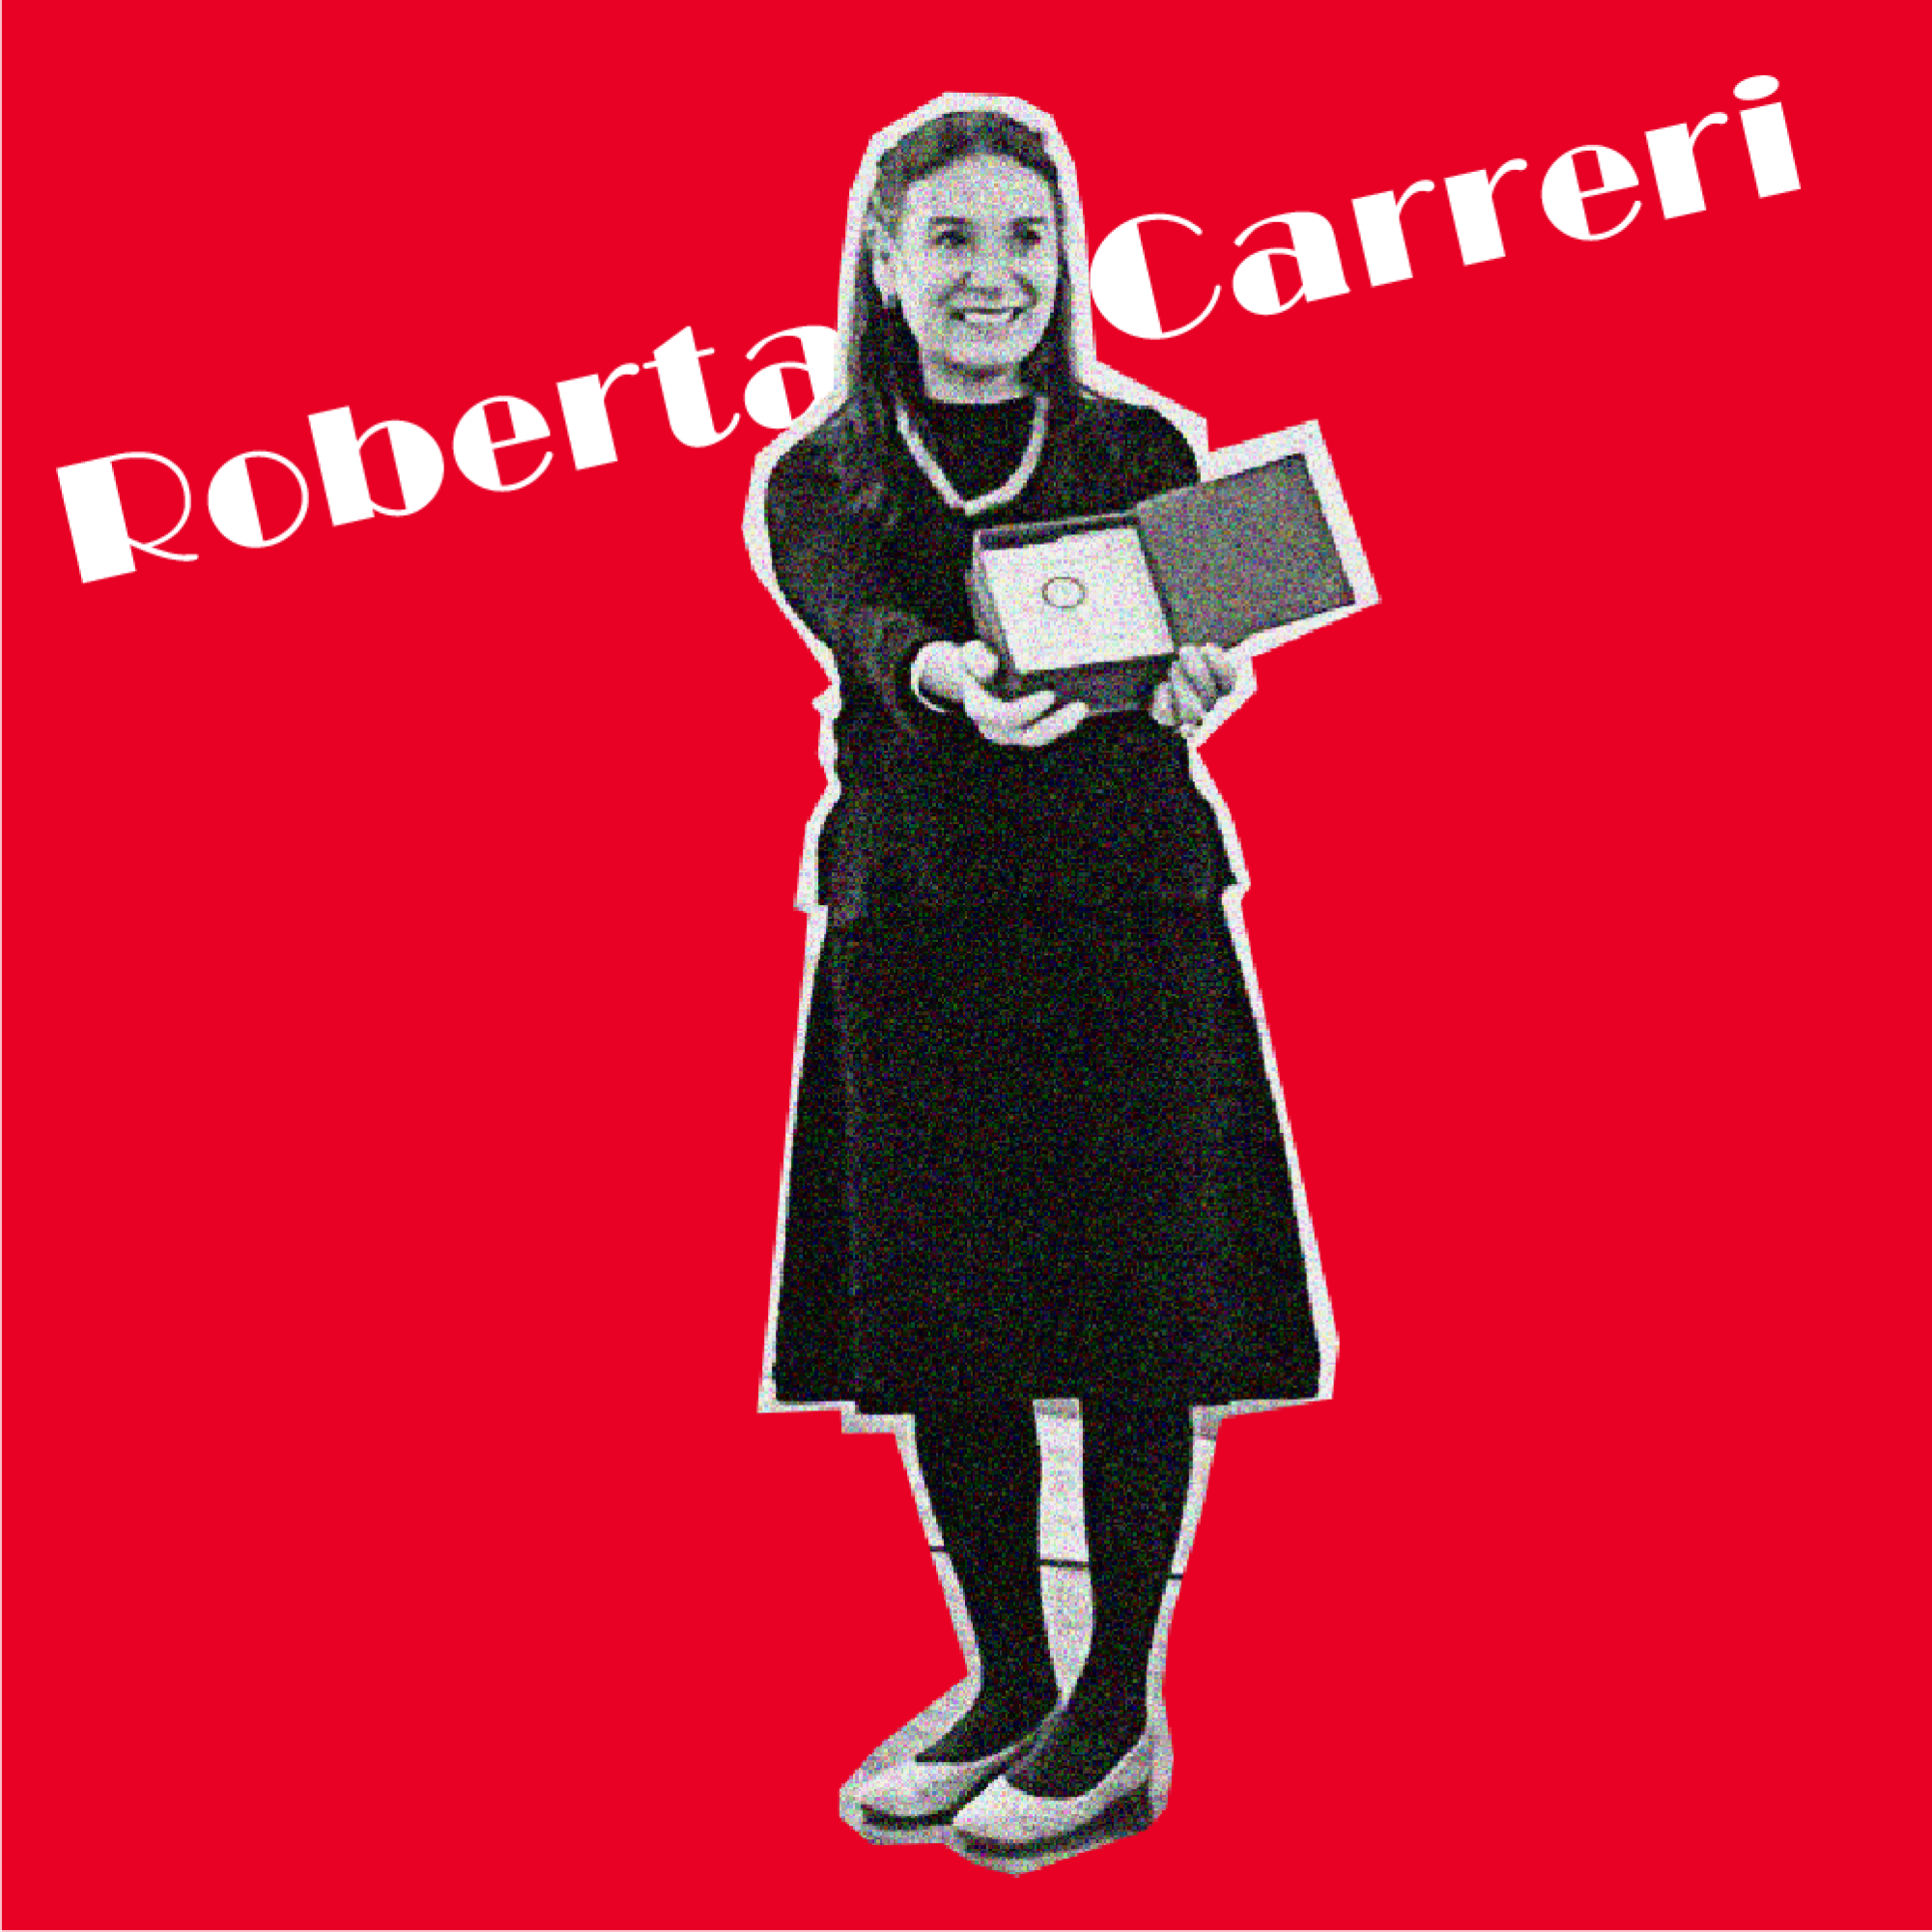 Roberta Carreri receives honorary award